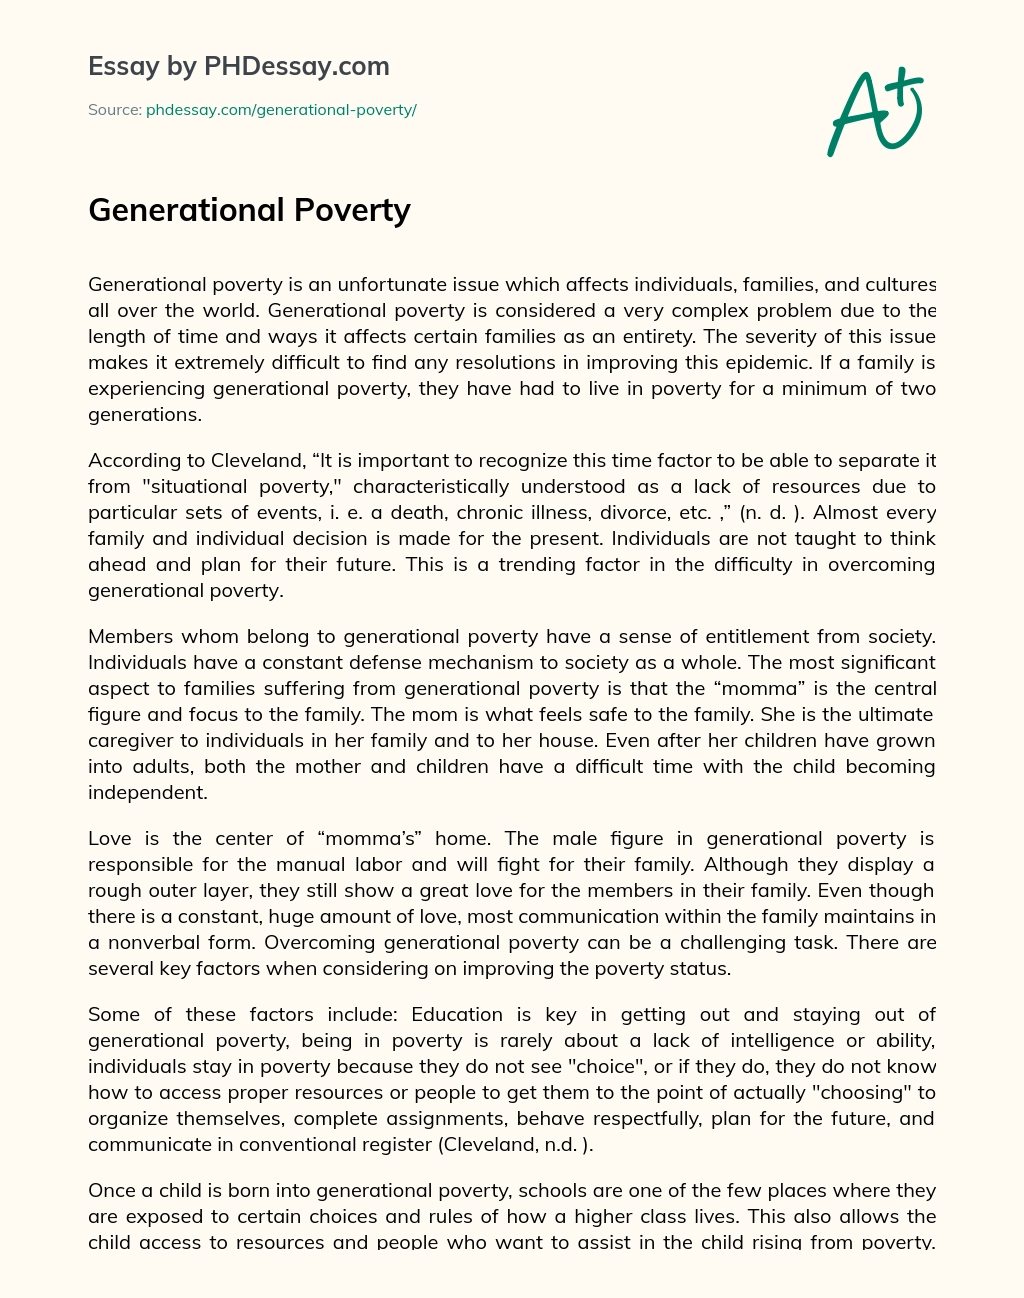 Generational Poverty essay